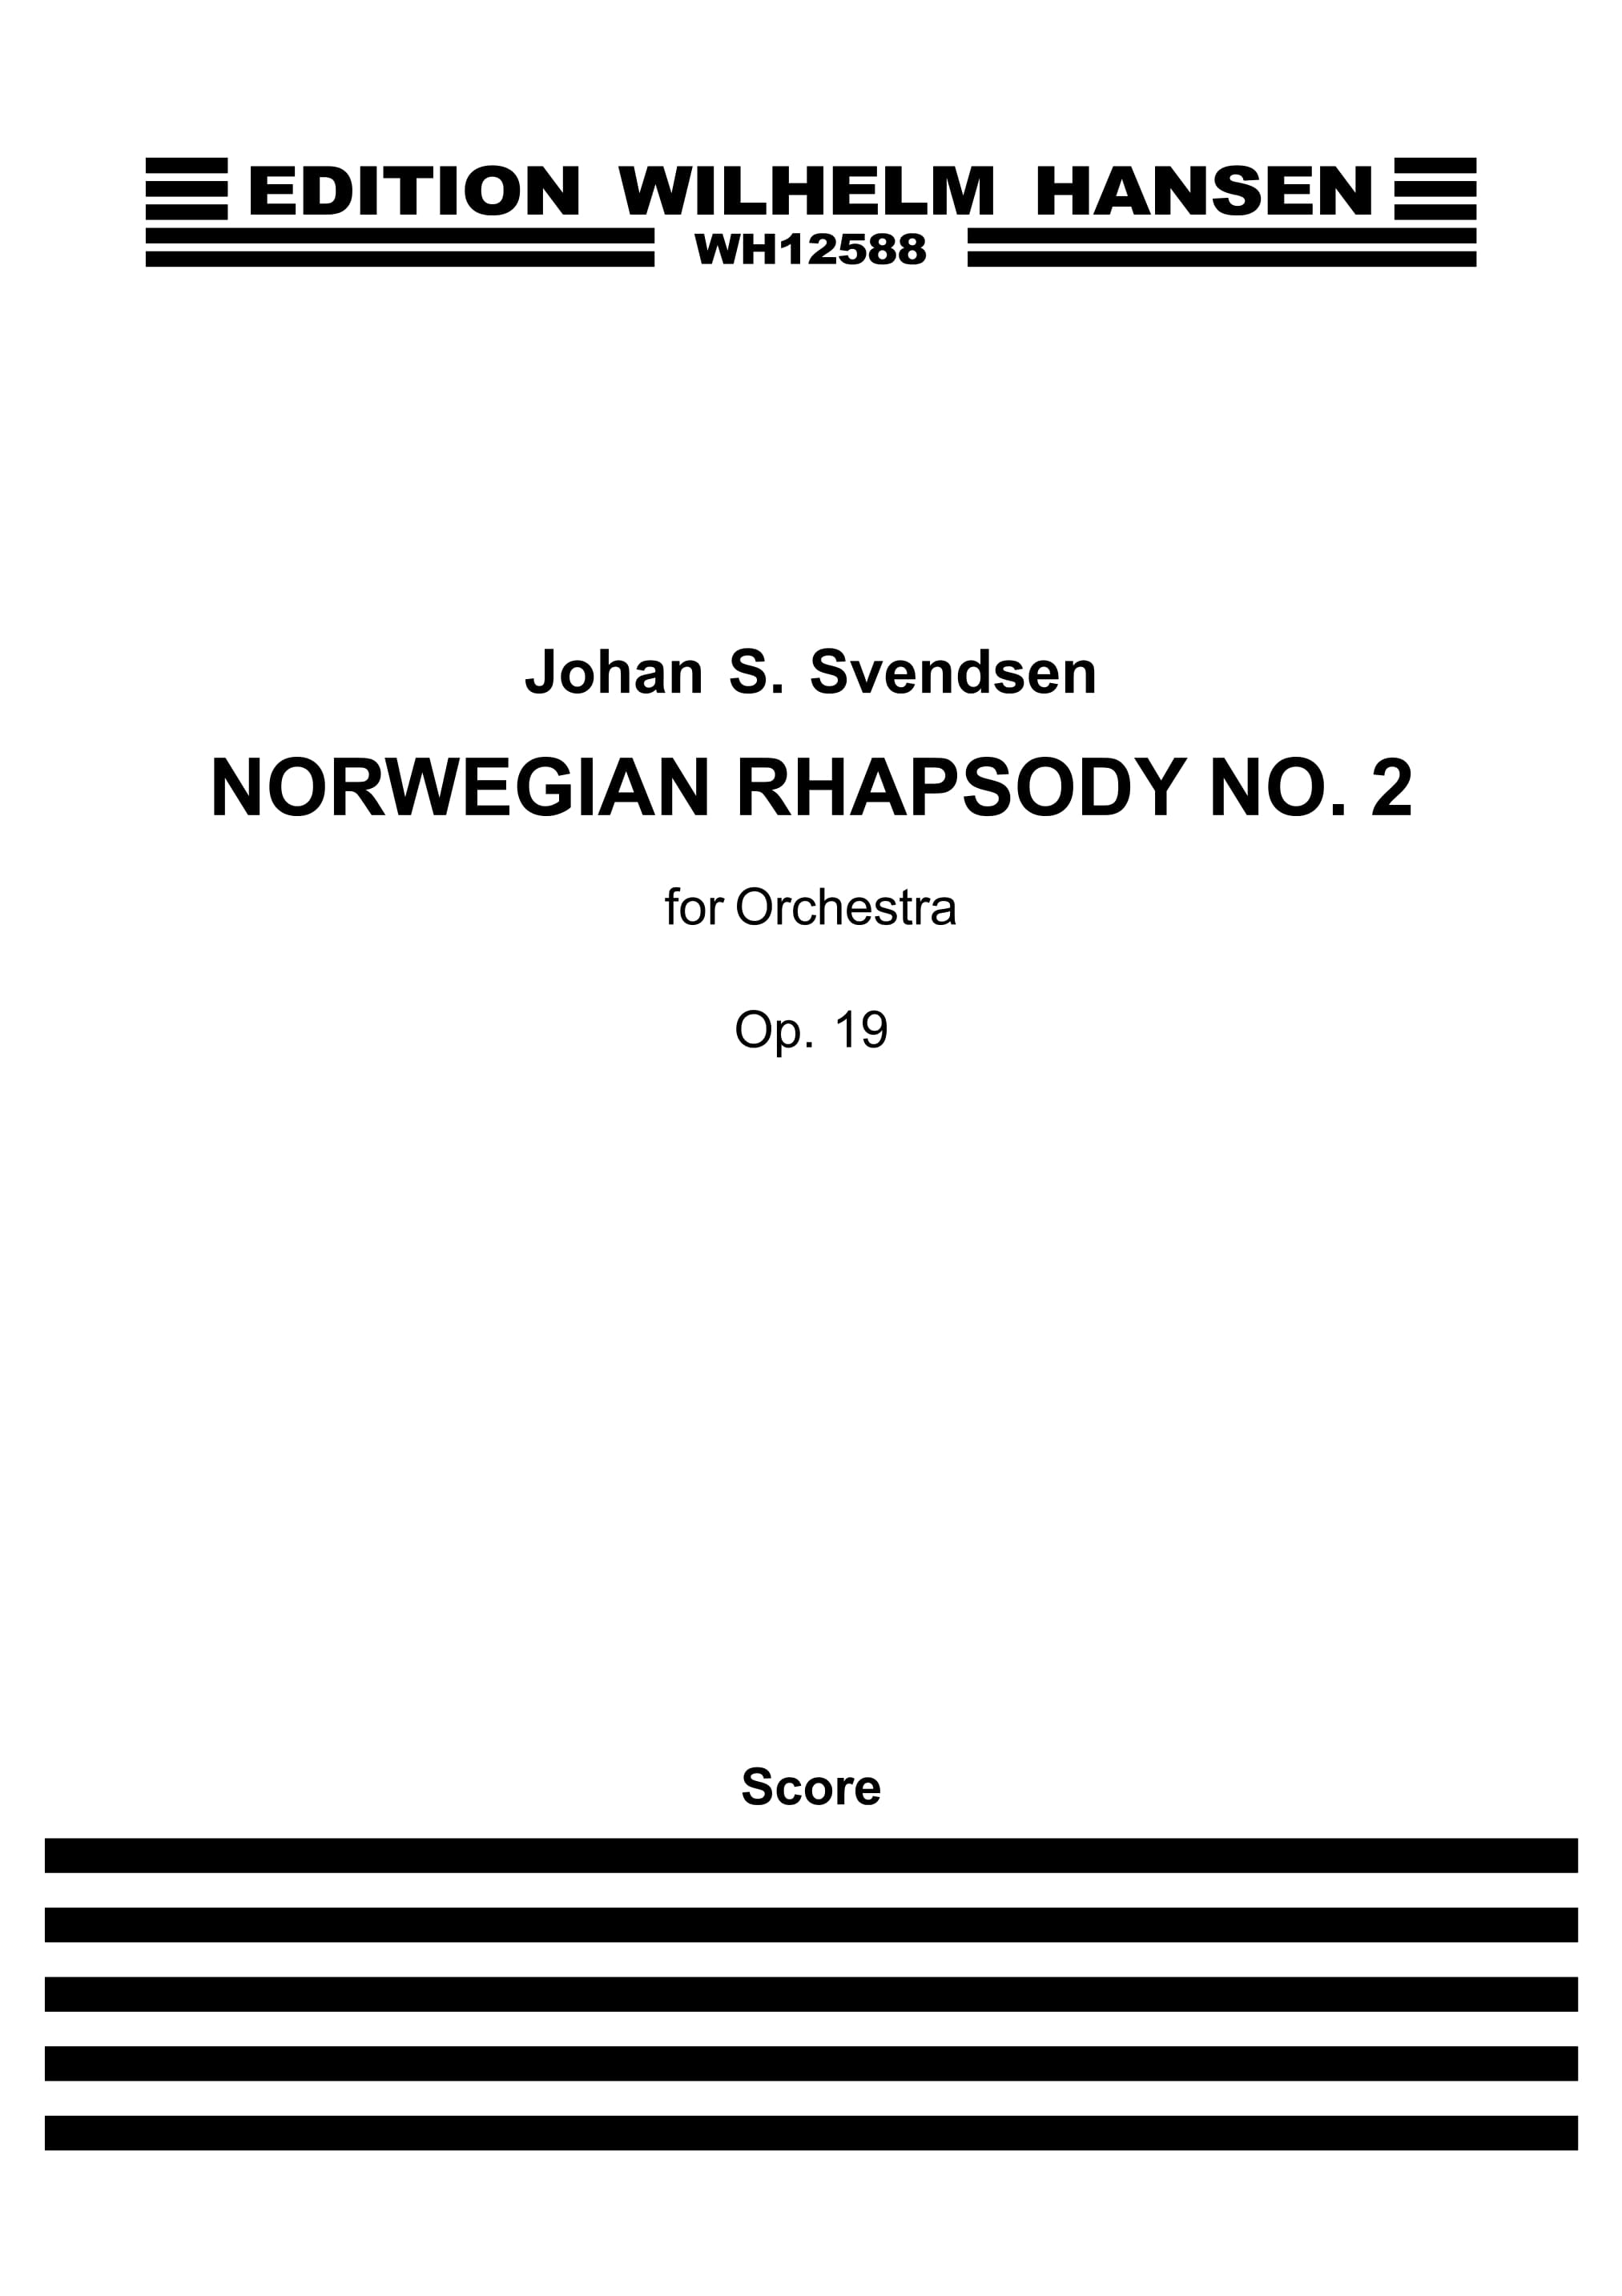 Johan Svendsen: Rapsodie Norveginne No. 2 Op. 19: Orchestra: Score